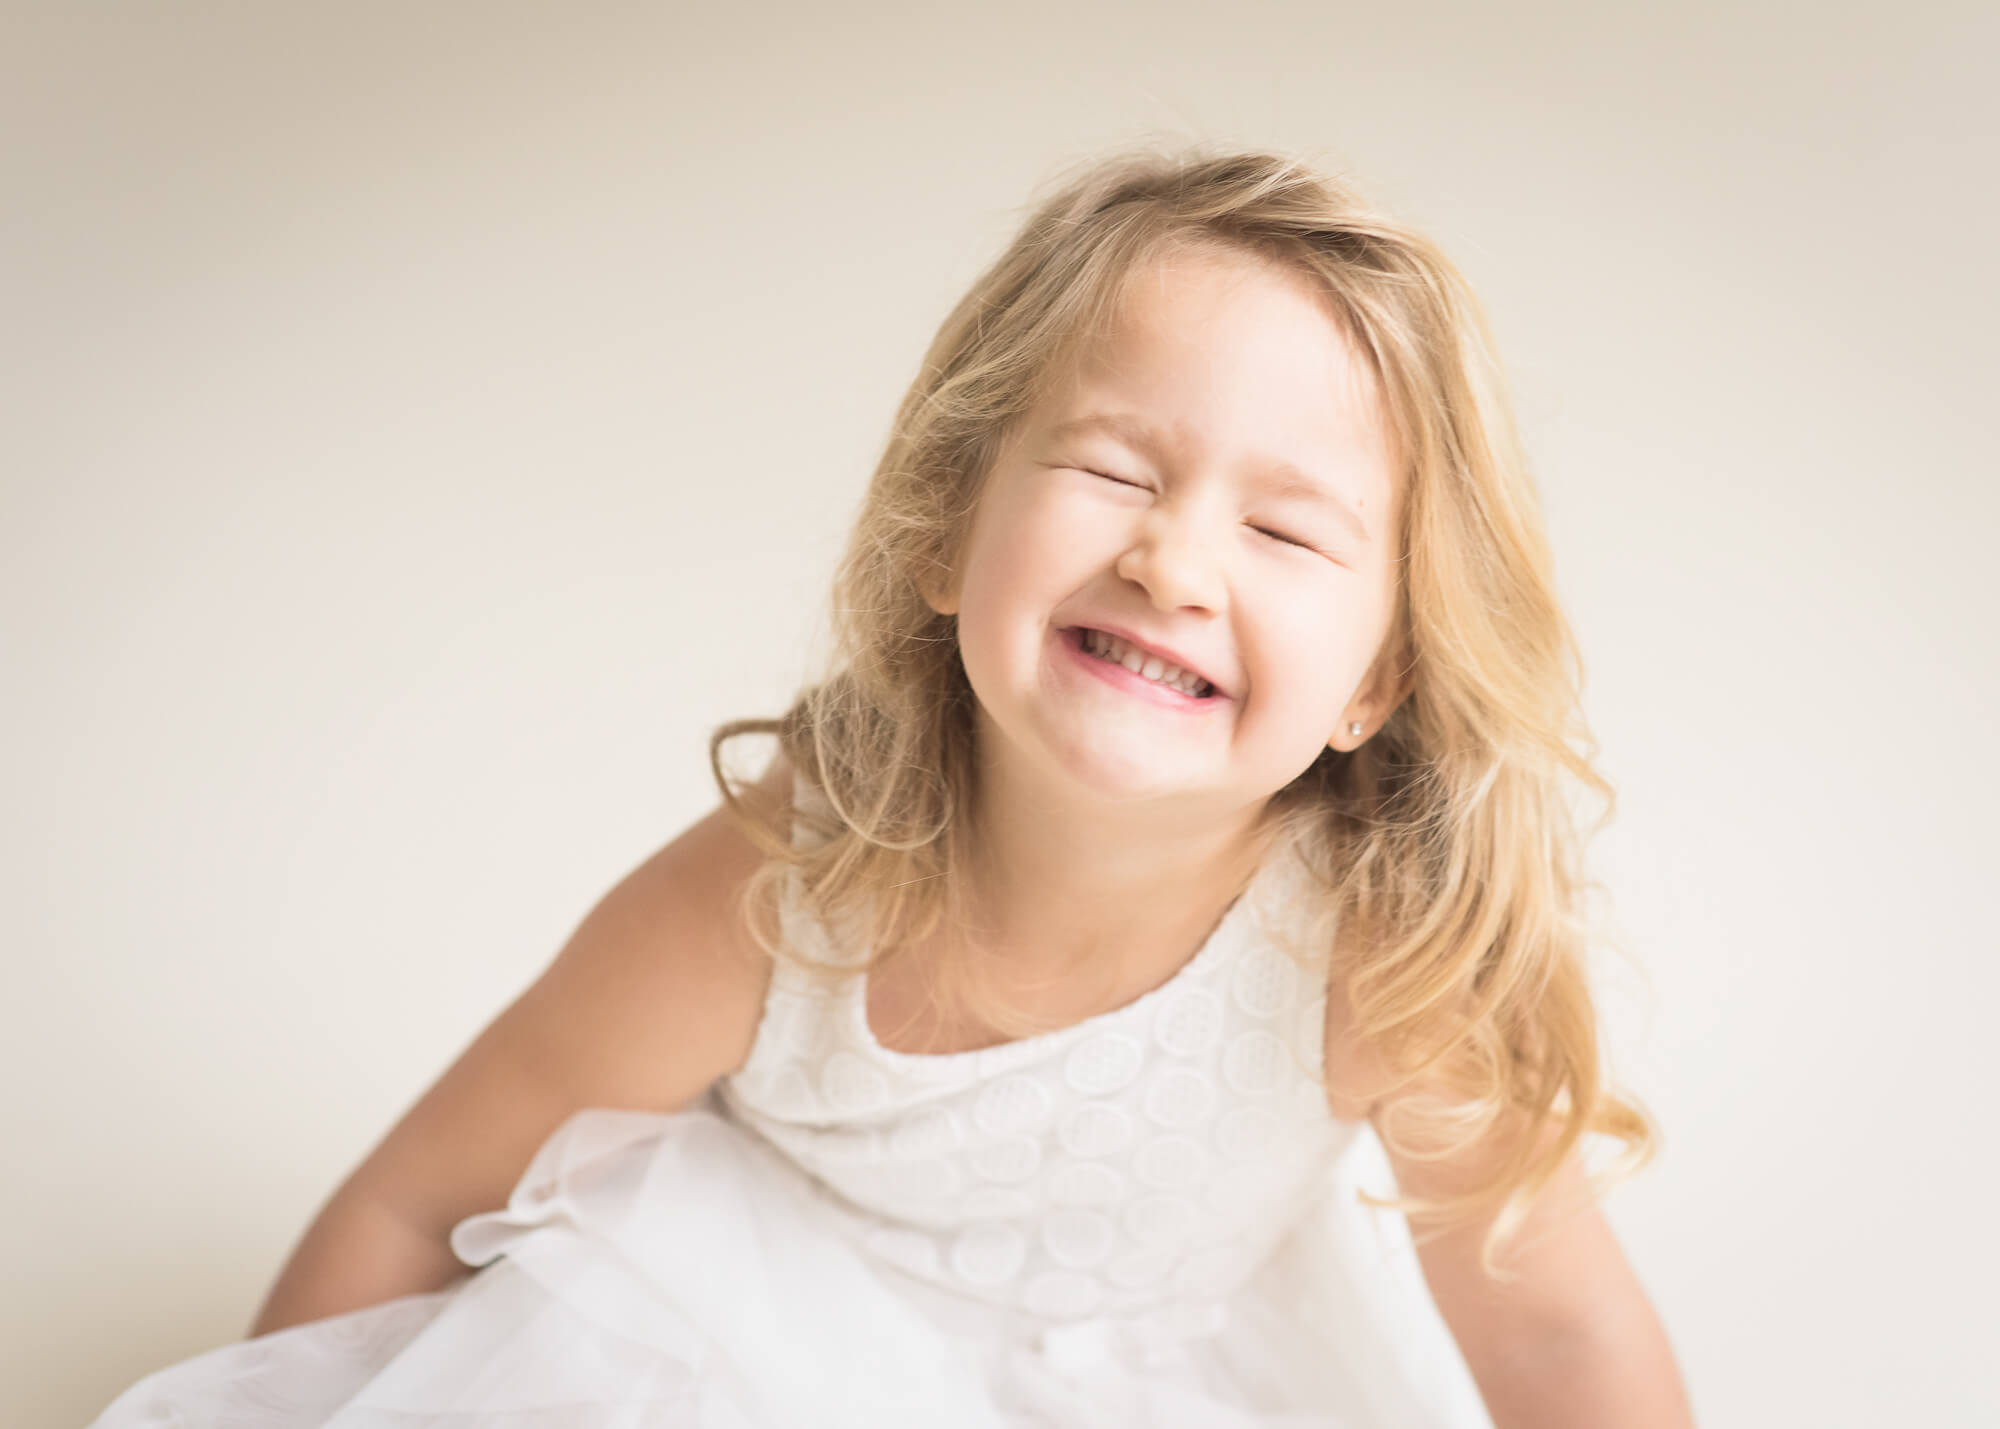 silly preschooler in studio portrait cream dress light background